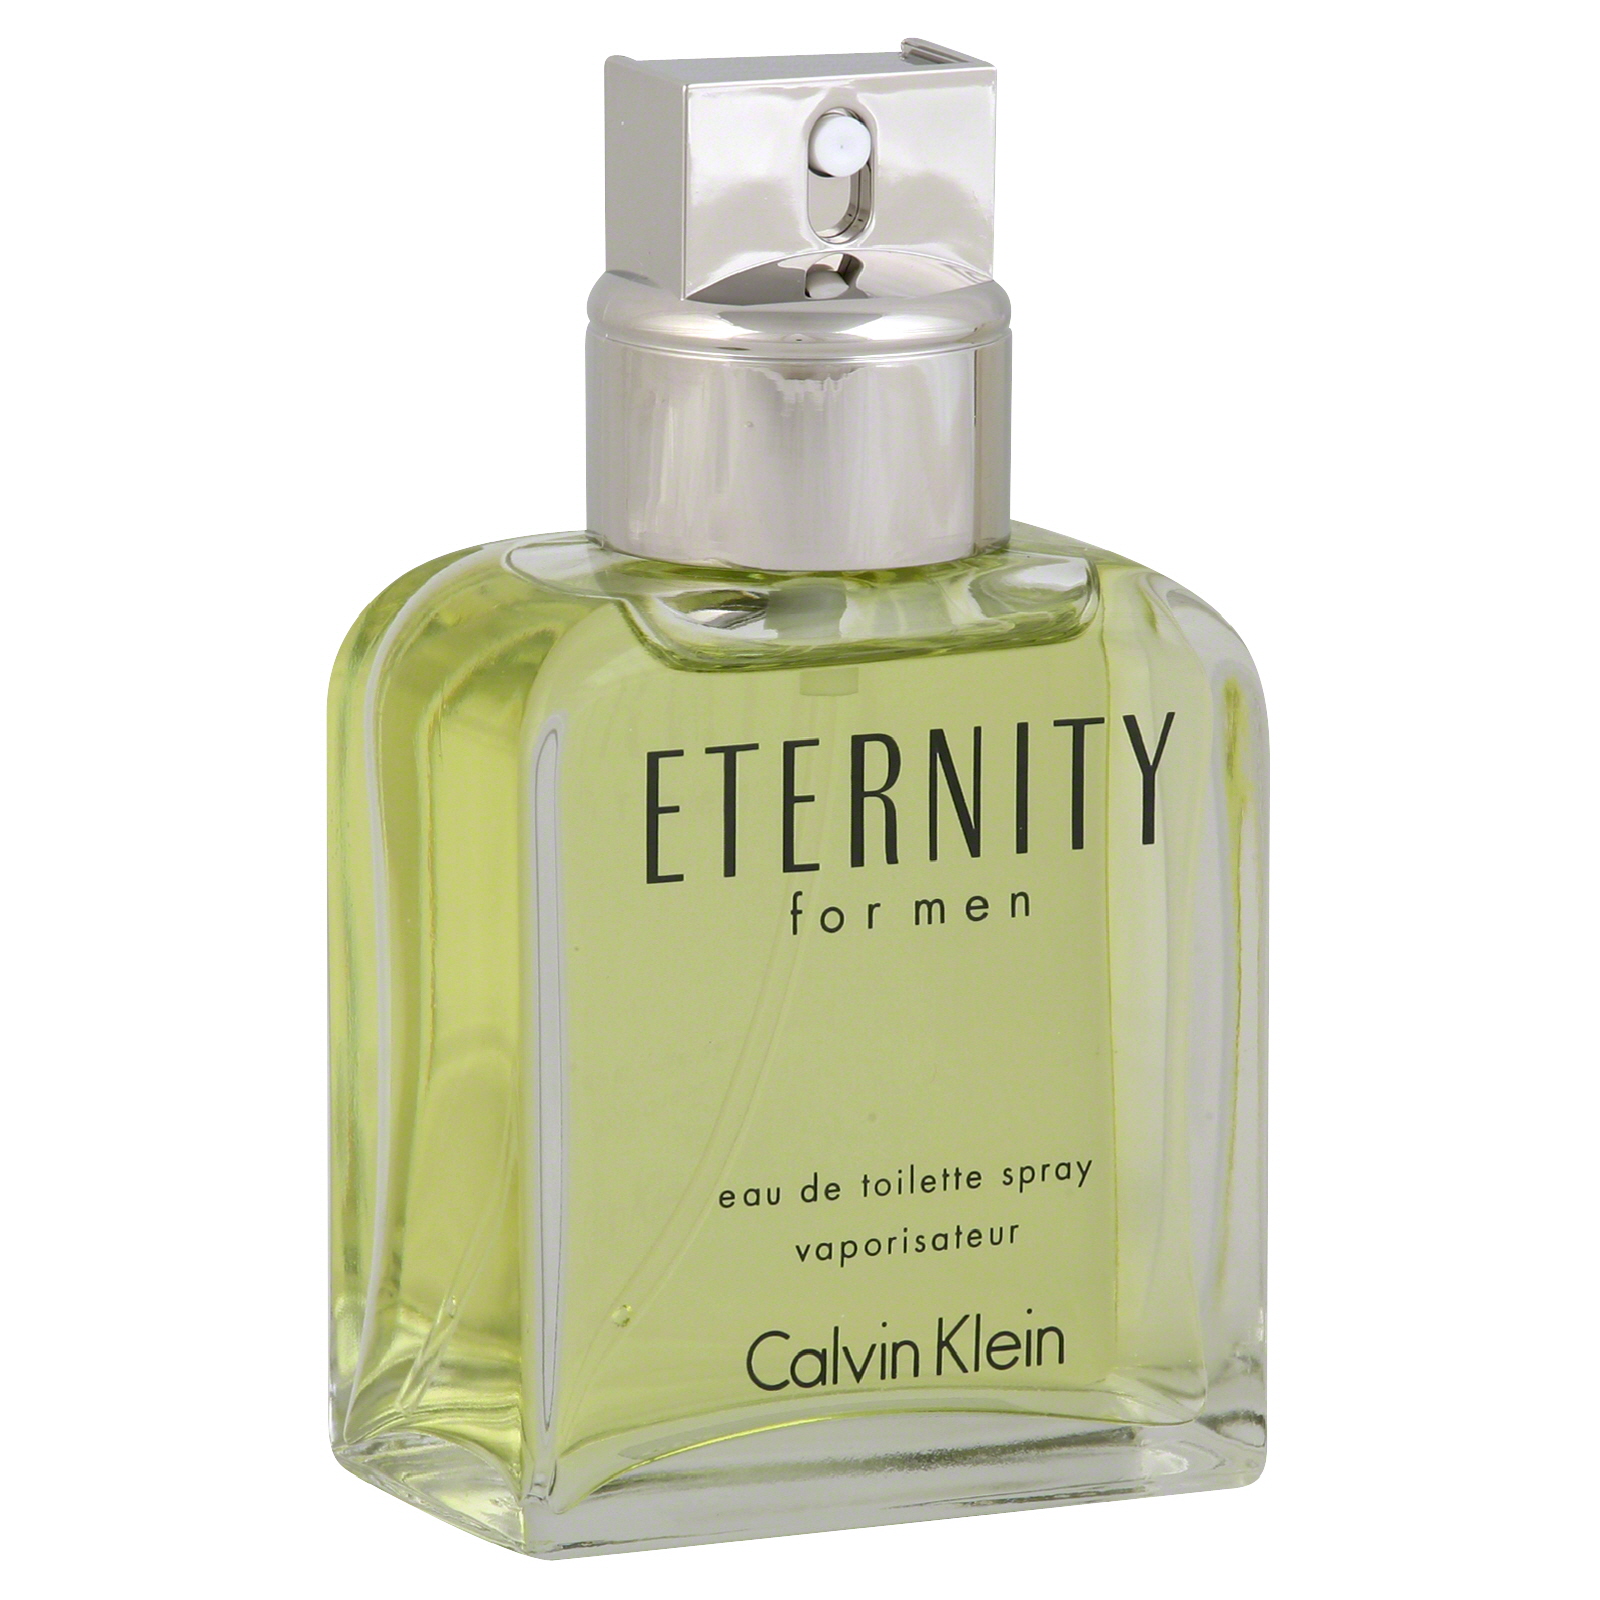 Calvin Klein Eternity Eau de Toilette Spray, For Men, 3.4 fl oz (100 ml)